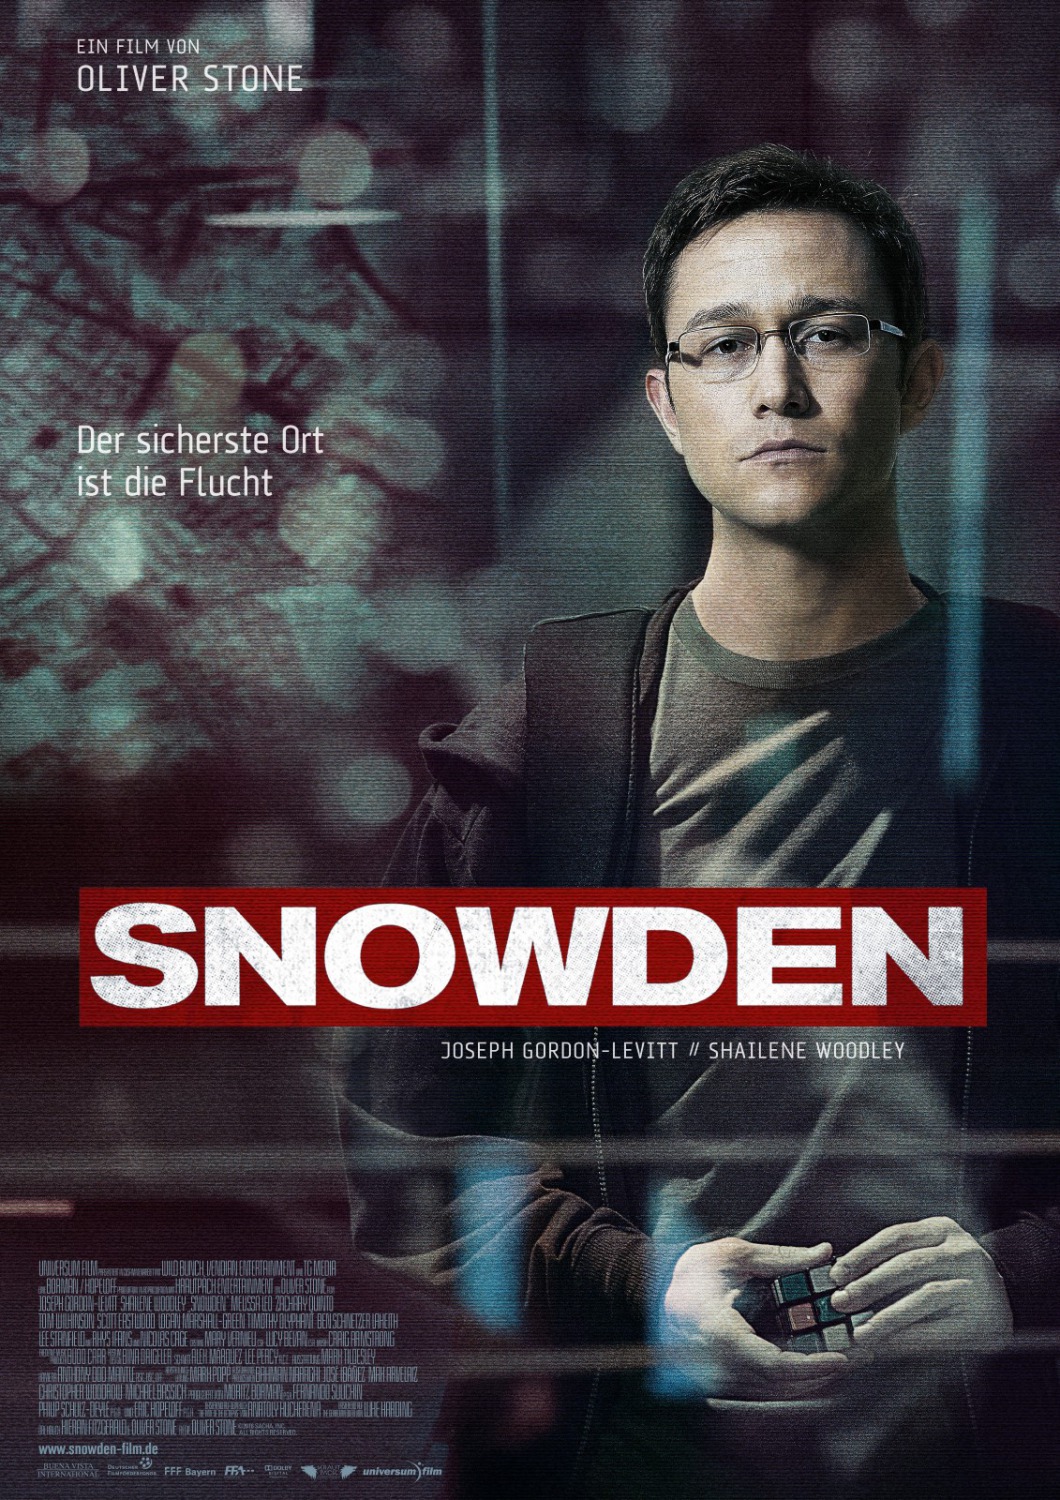 She Said (film) and Snowden